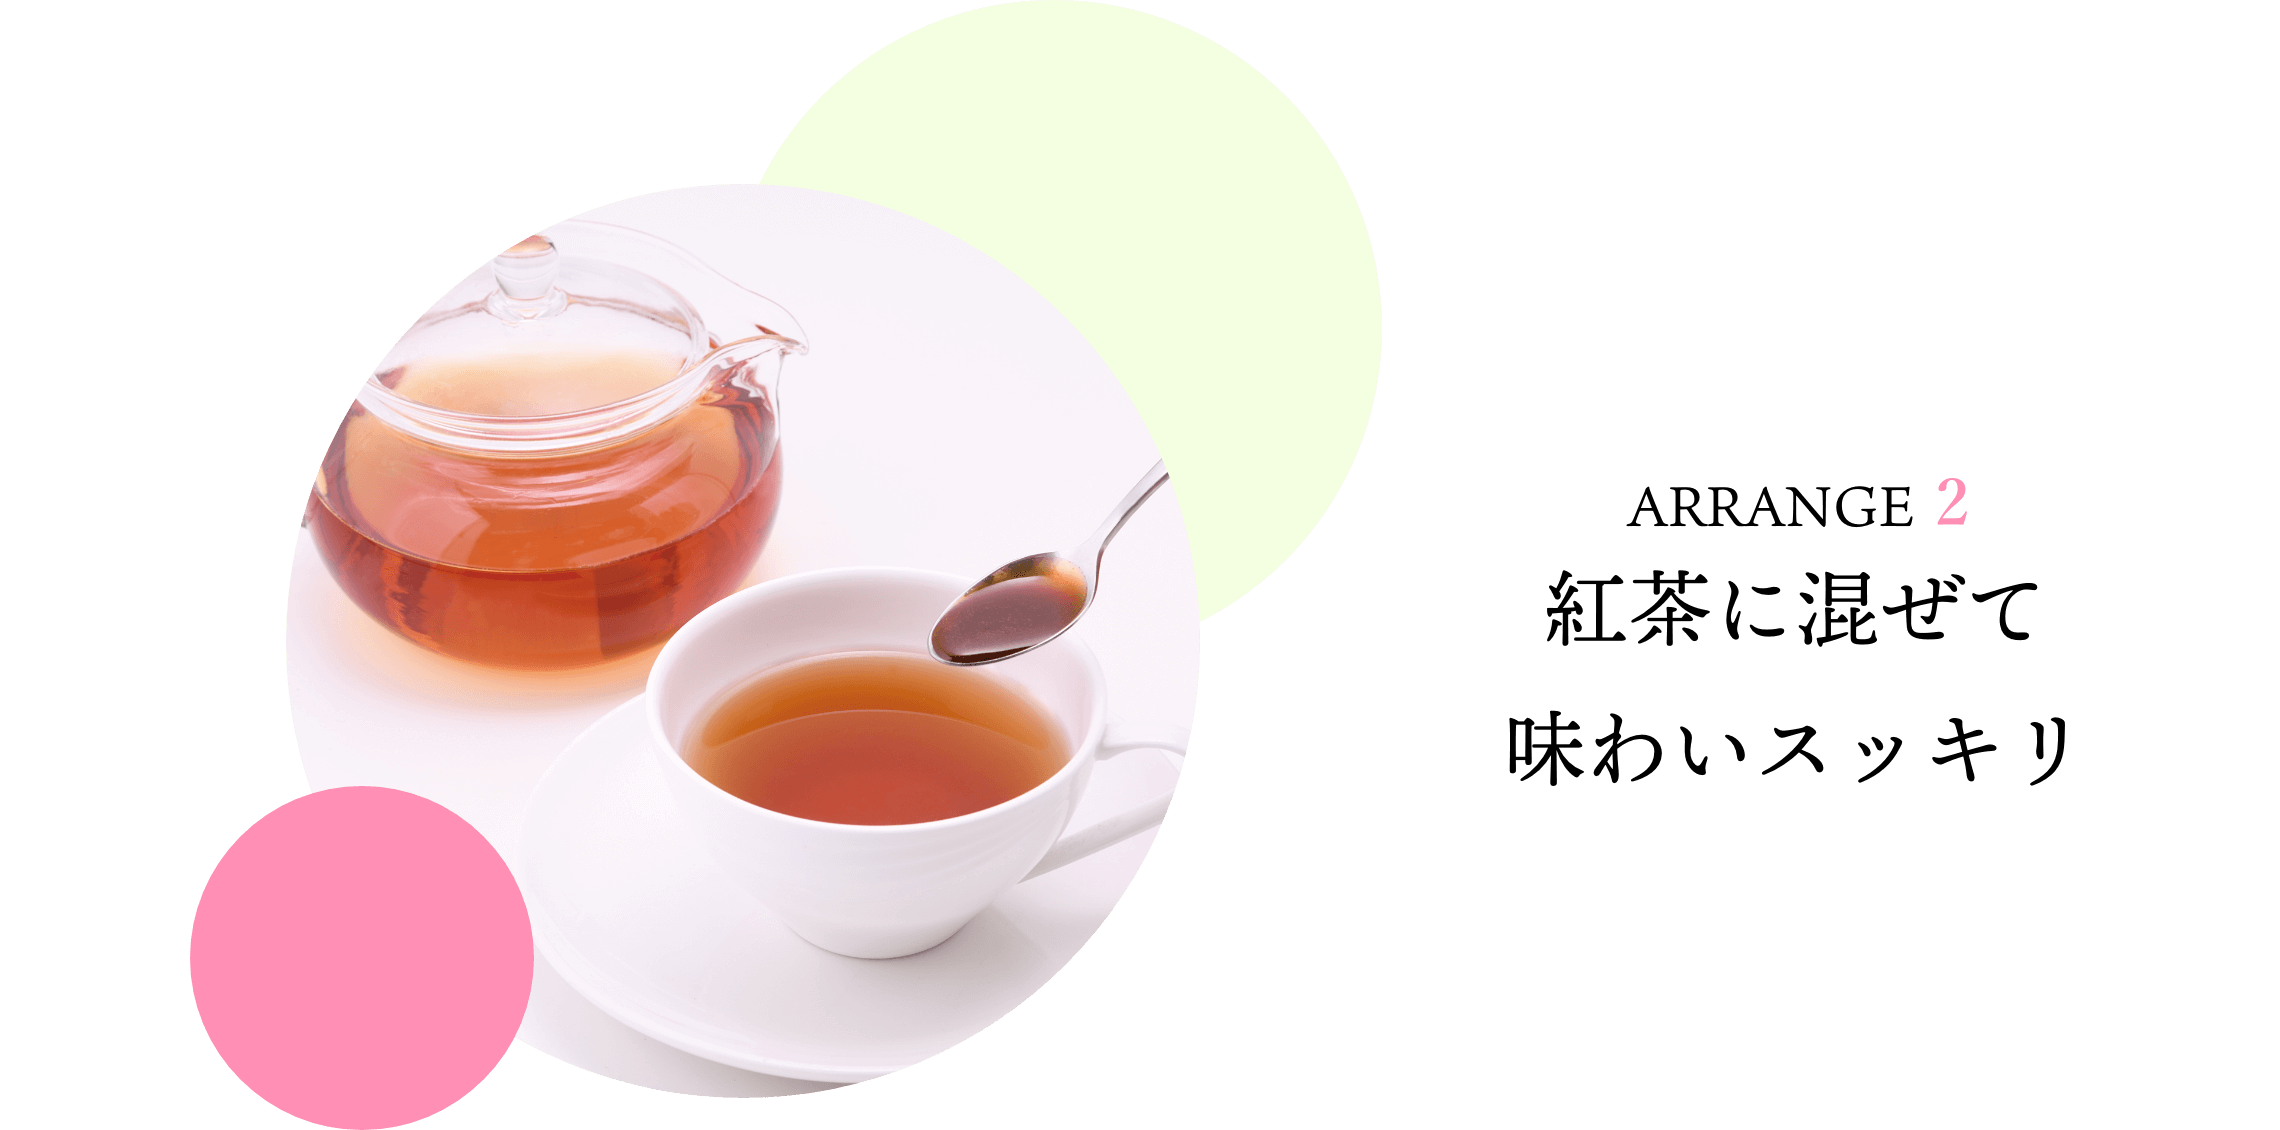 ARRANGE 2 紅茶に混ぜて味わいスッキリ